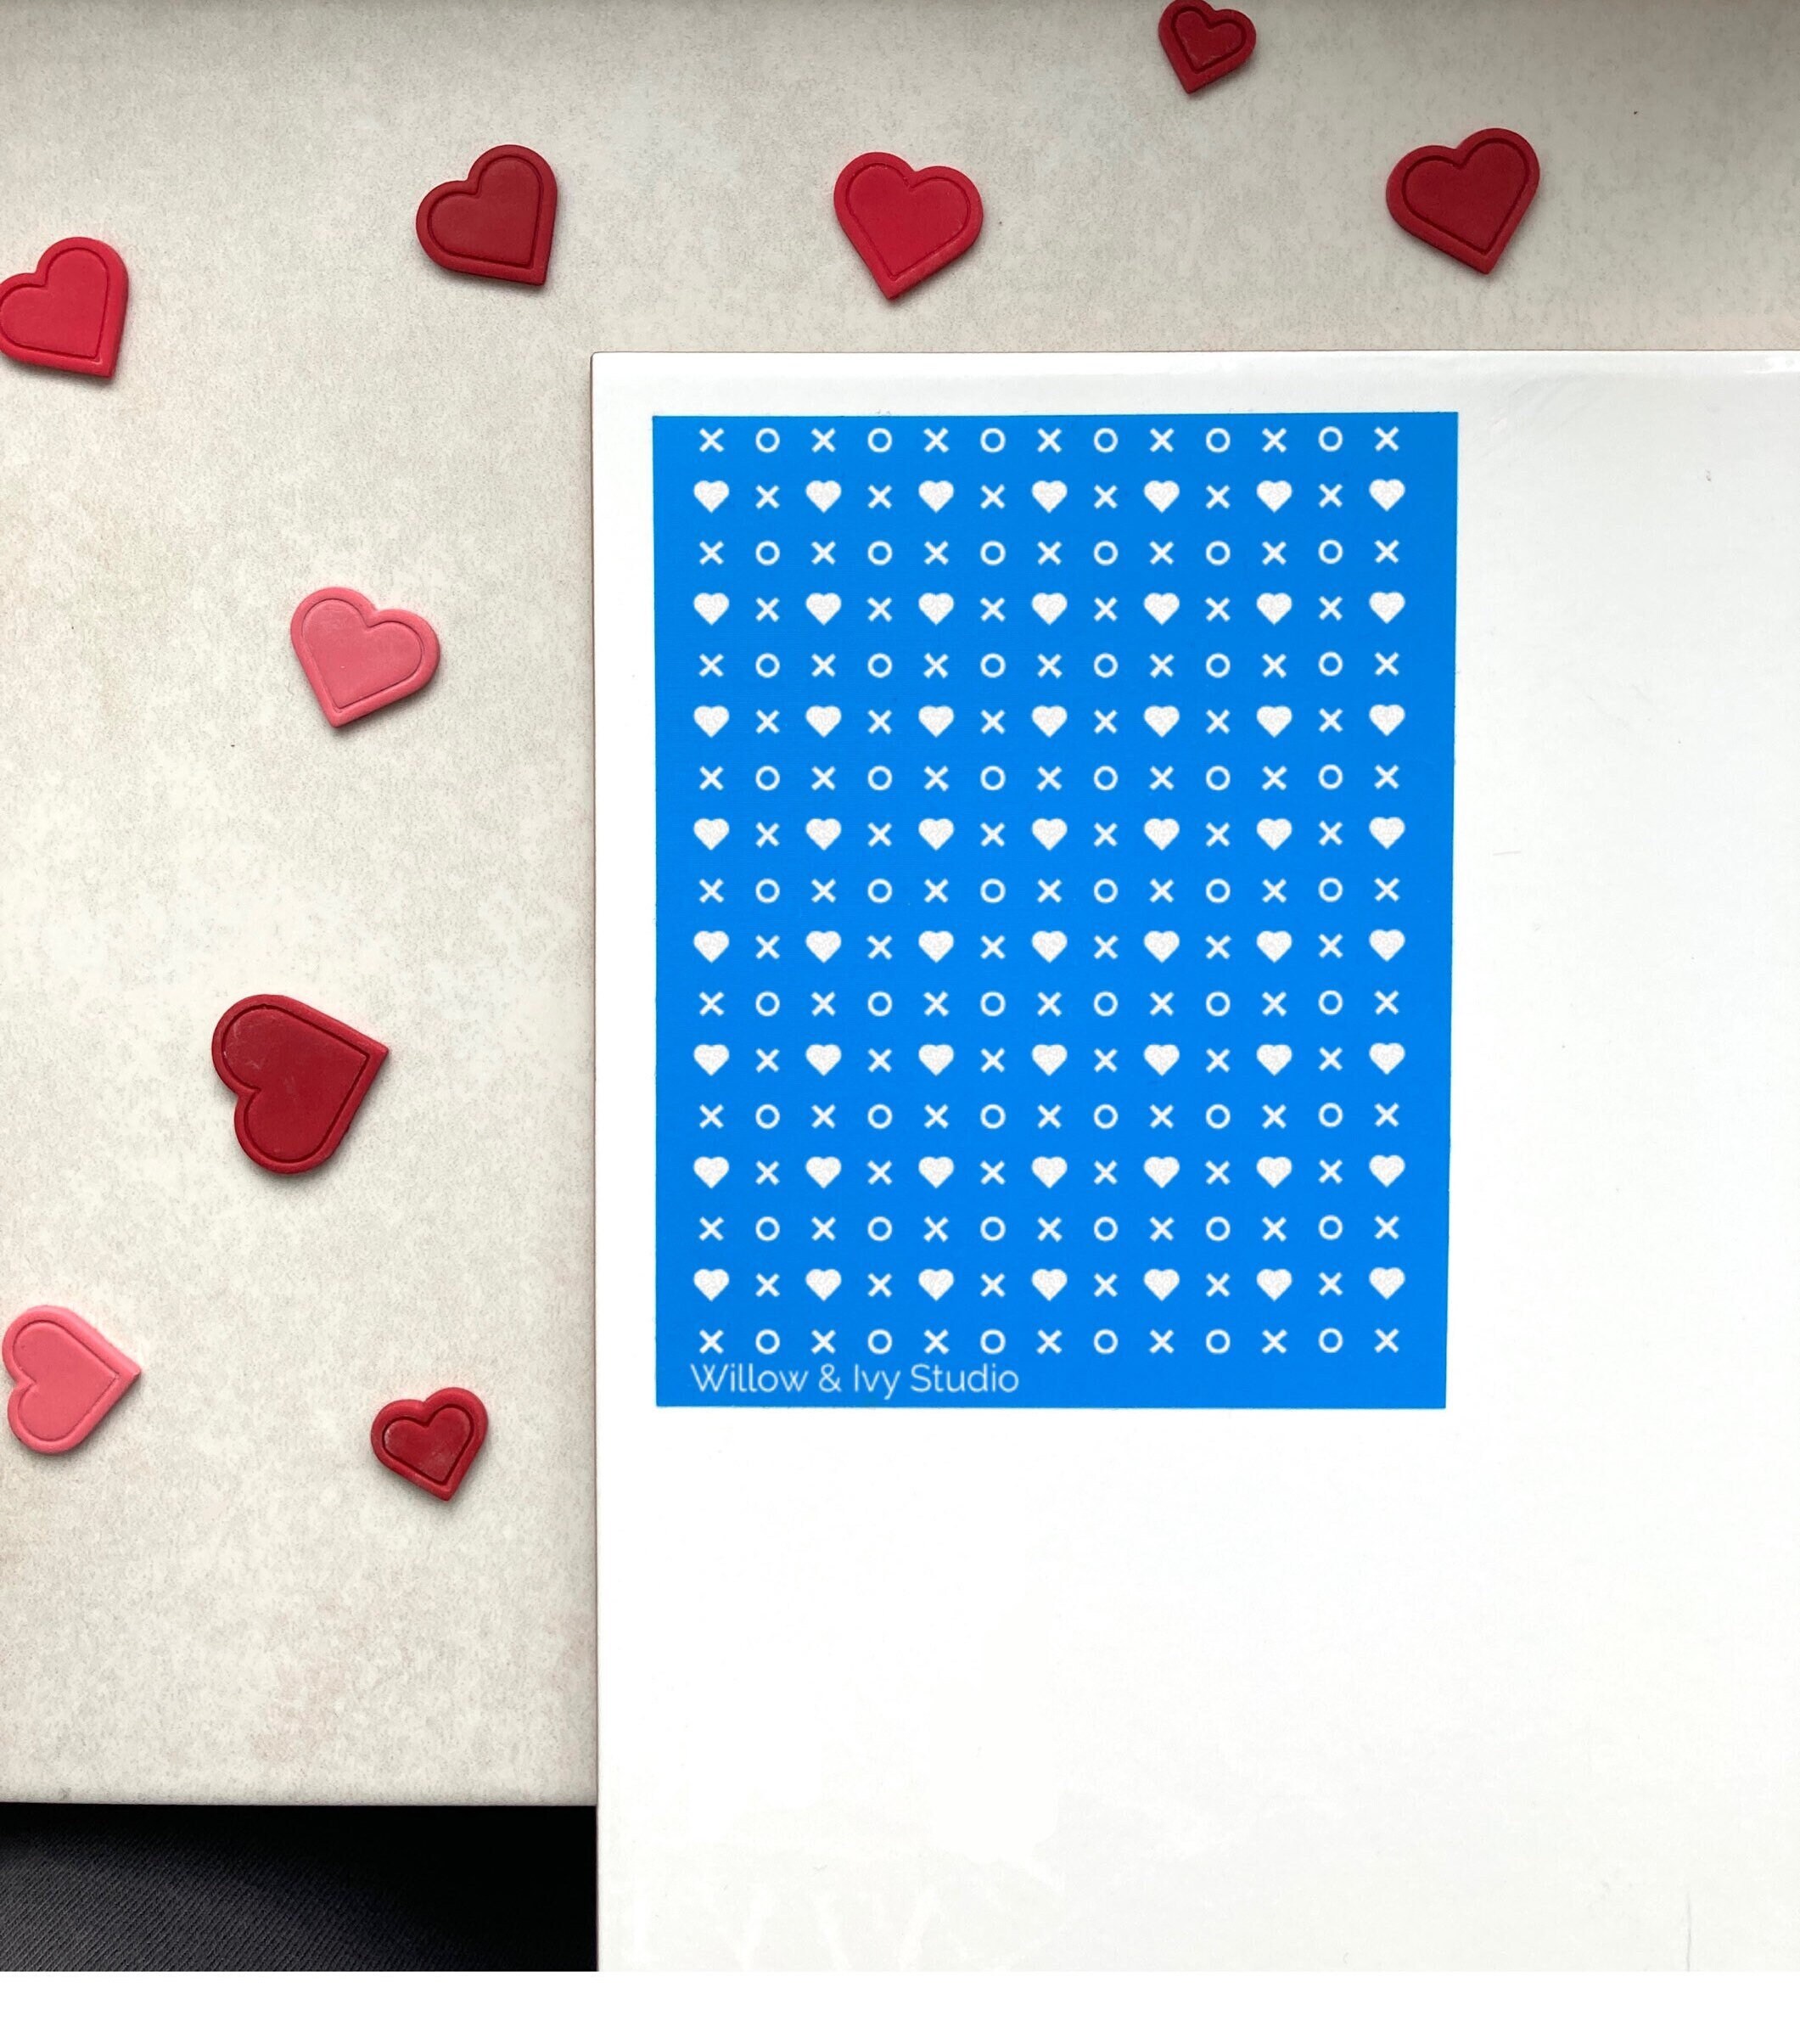  Juome Valentine's Day Silk Screen Stencils for Polymer